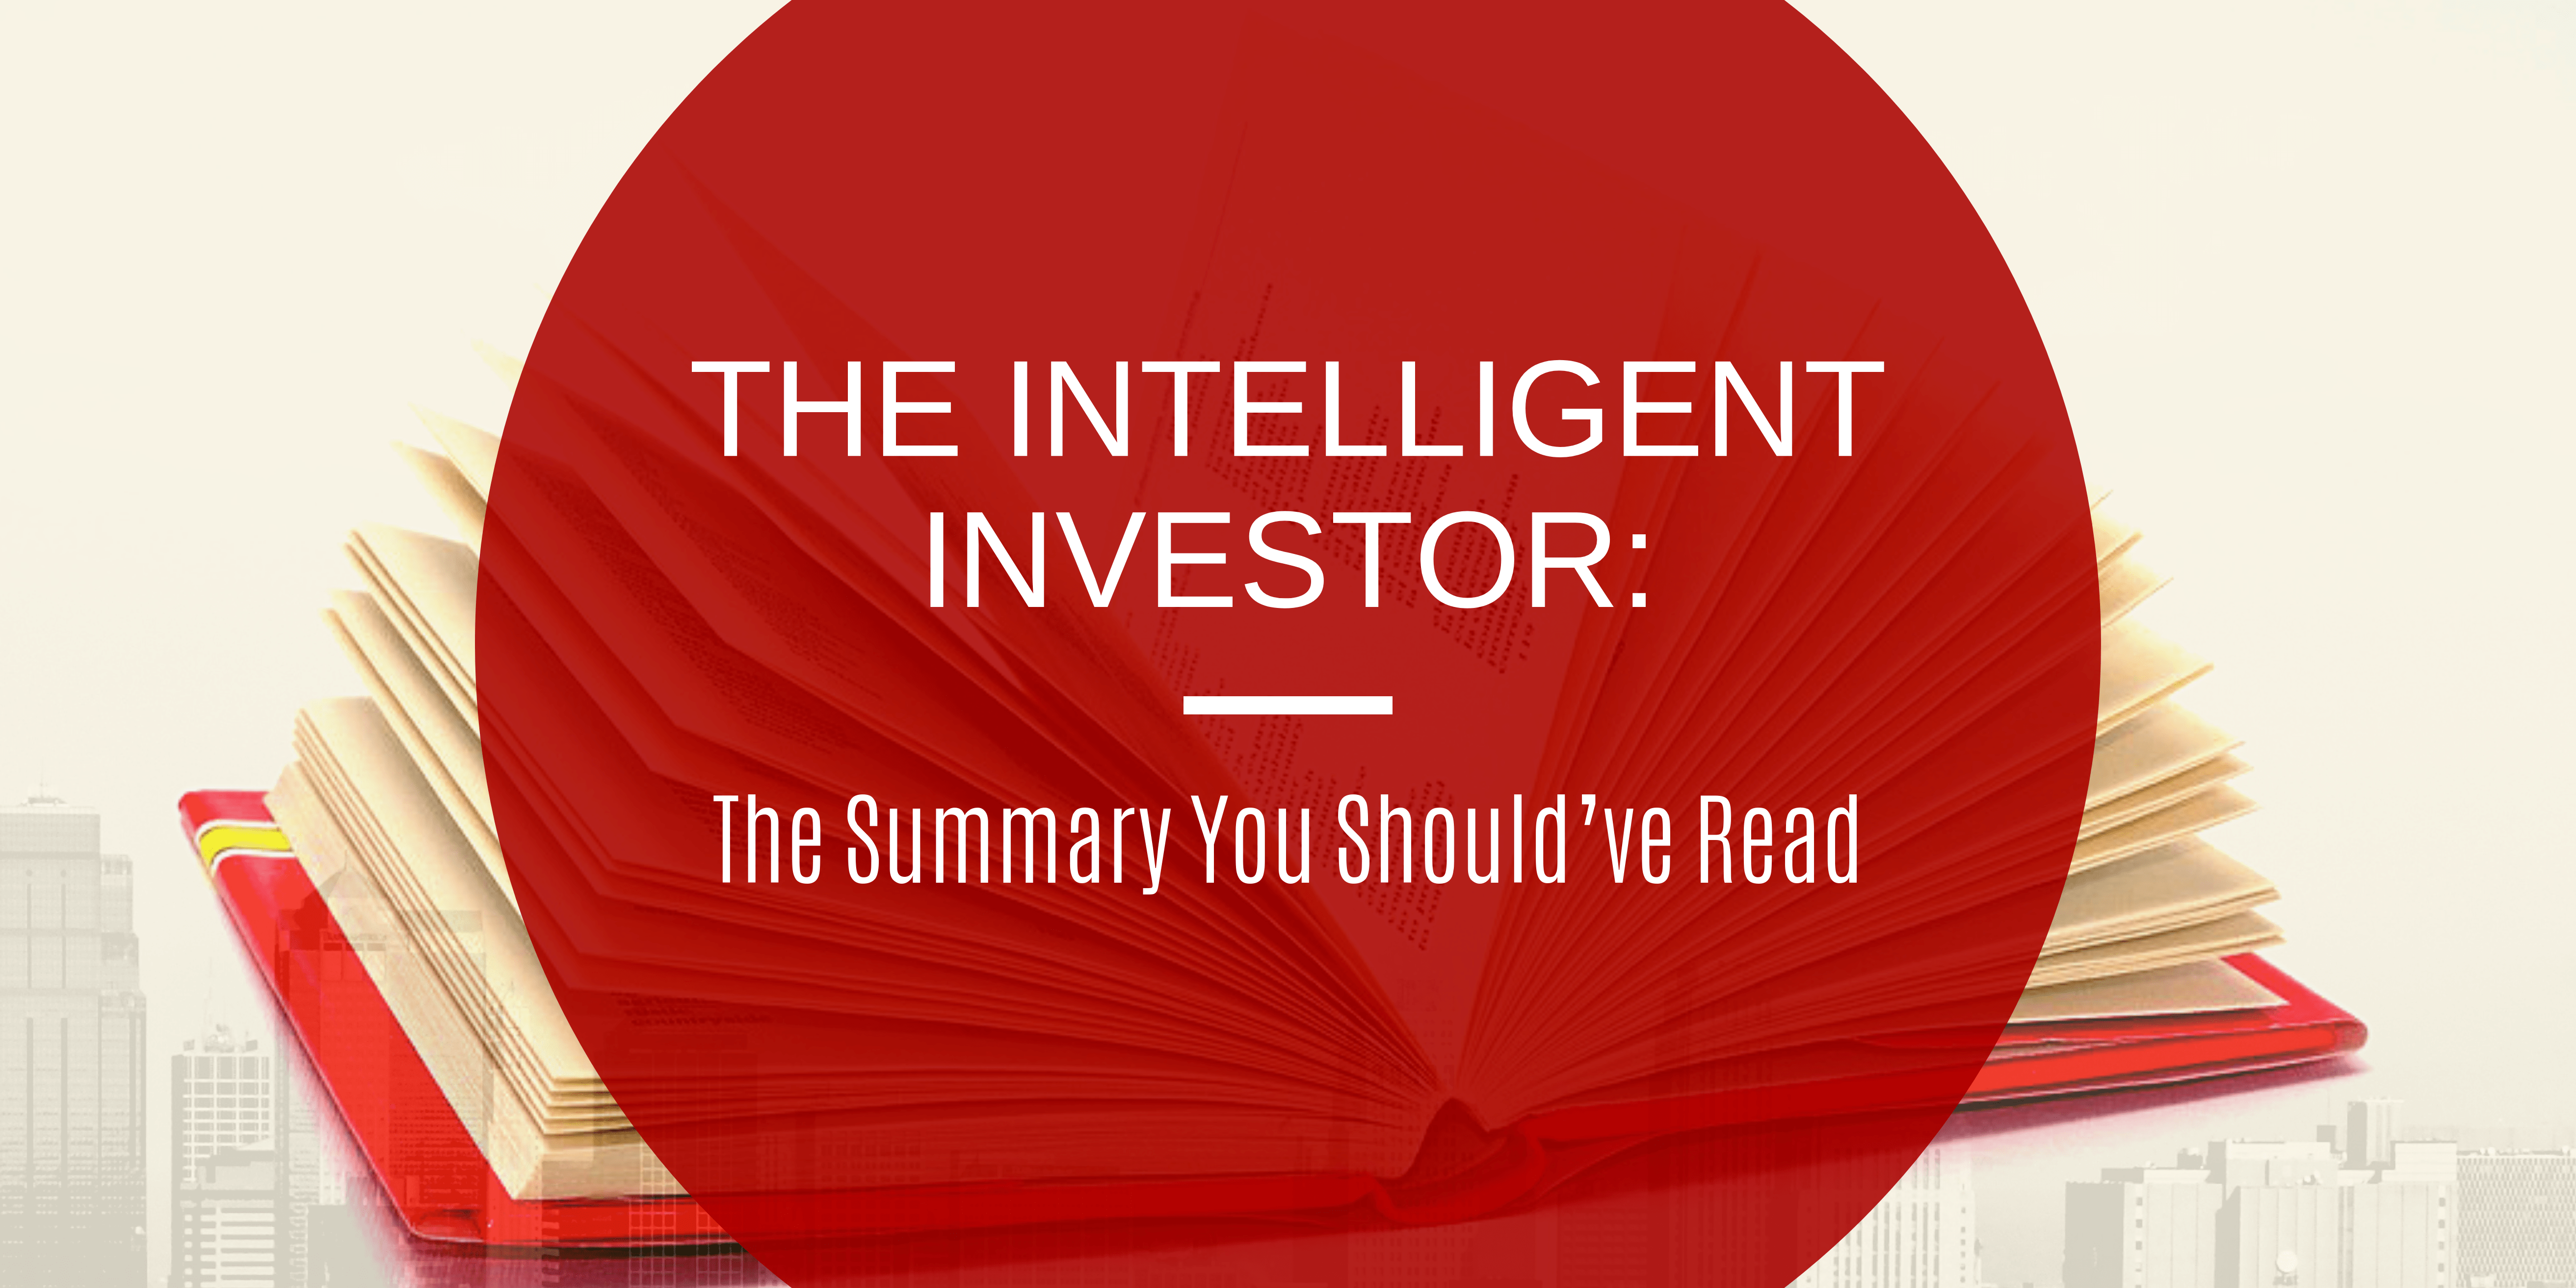 https://www.netnethunter.com/wp-content/uploads/2019/08/the-intelligent-investor-summary.png